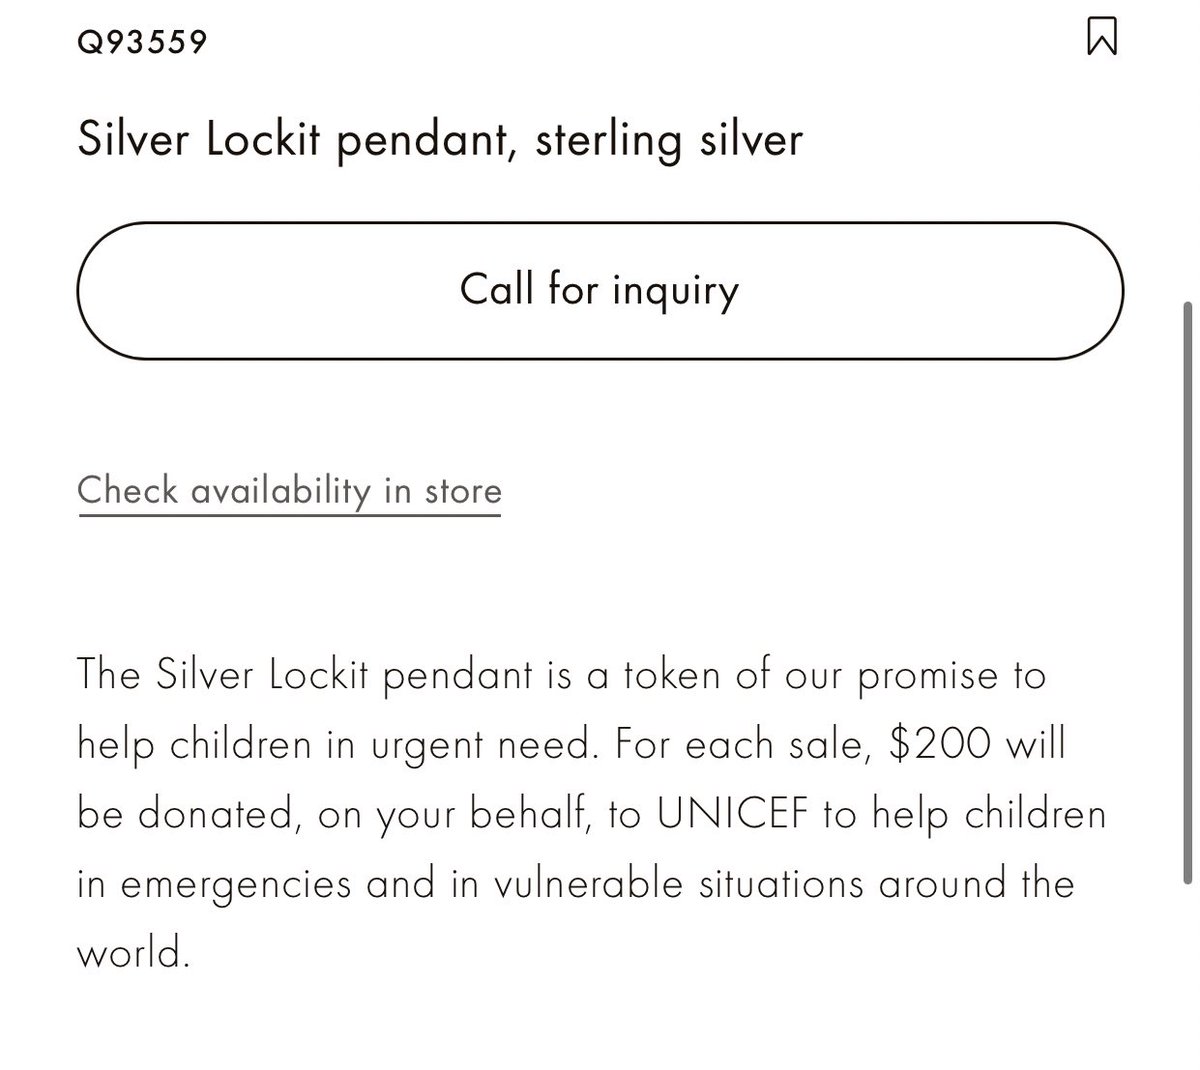 Louis Vuitton LOCKIT Silver lockit pendant, sterling silver (Q93559)